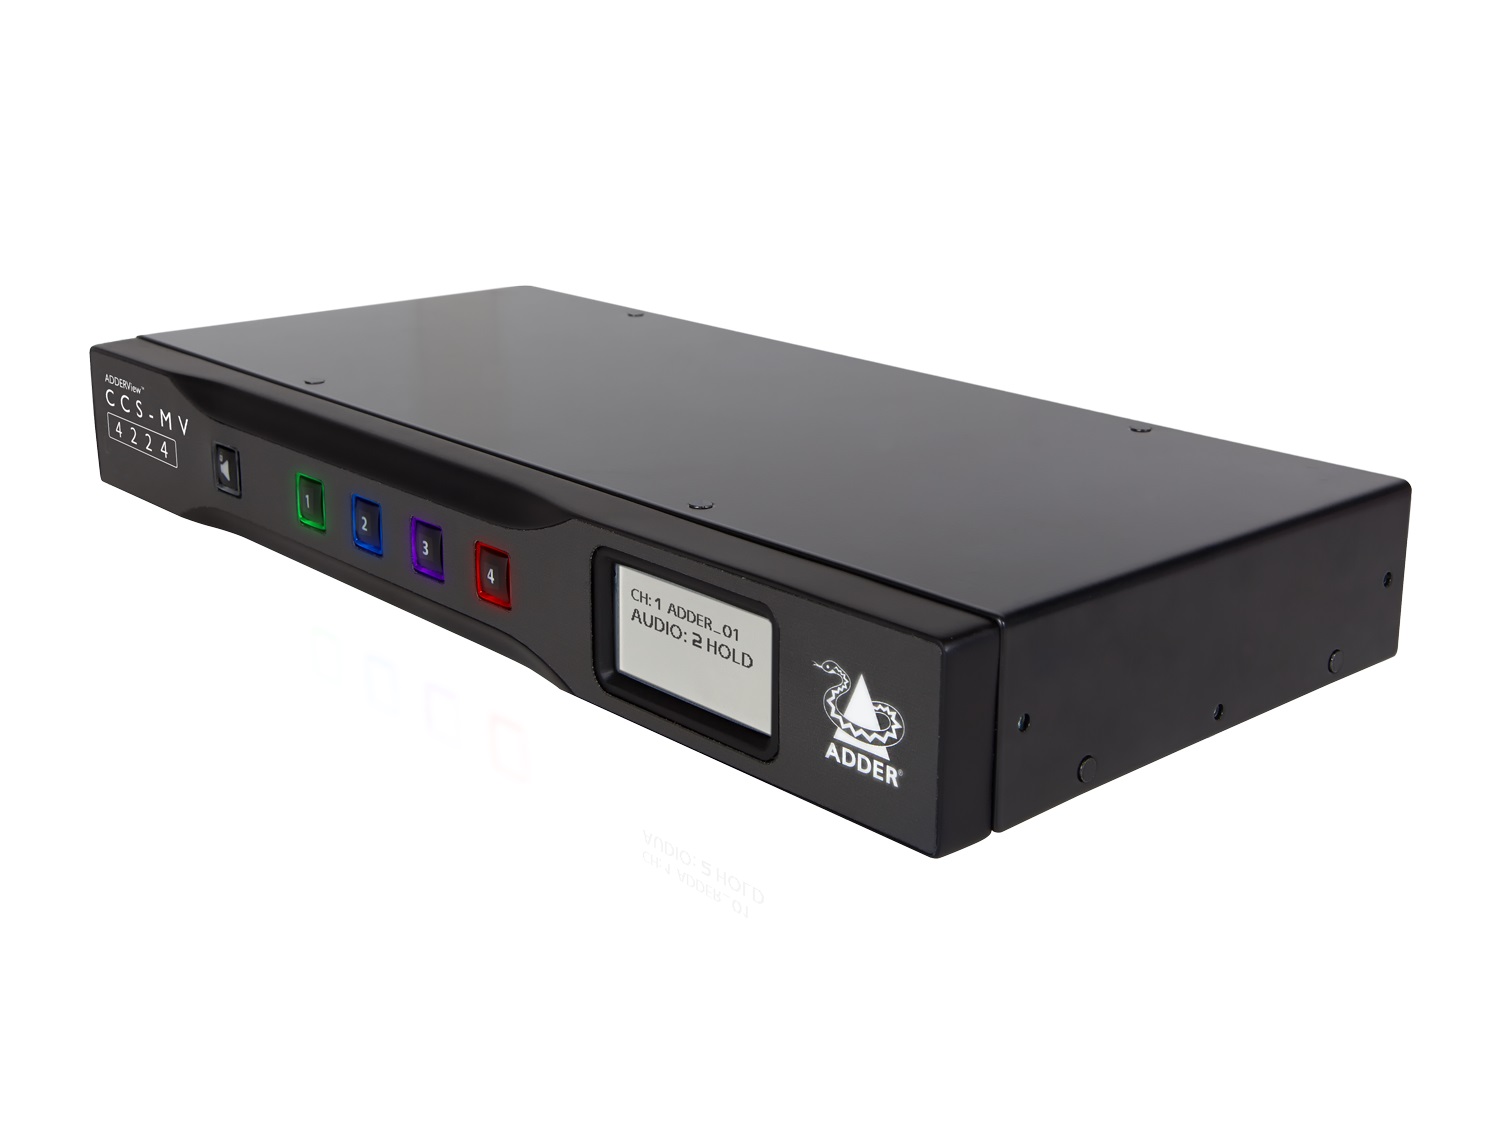 CCS-MV4224 4 port DP\HDMI to HDMI Multi-Viewer Switch by Adder